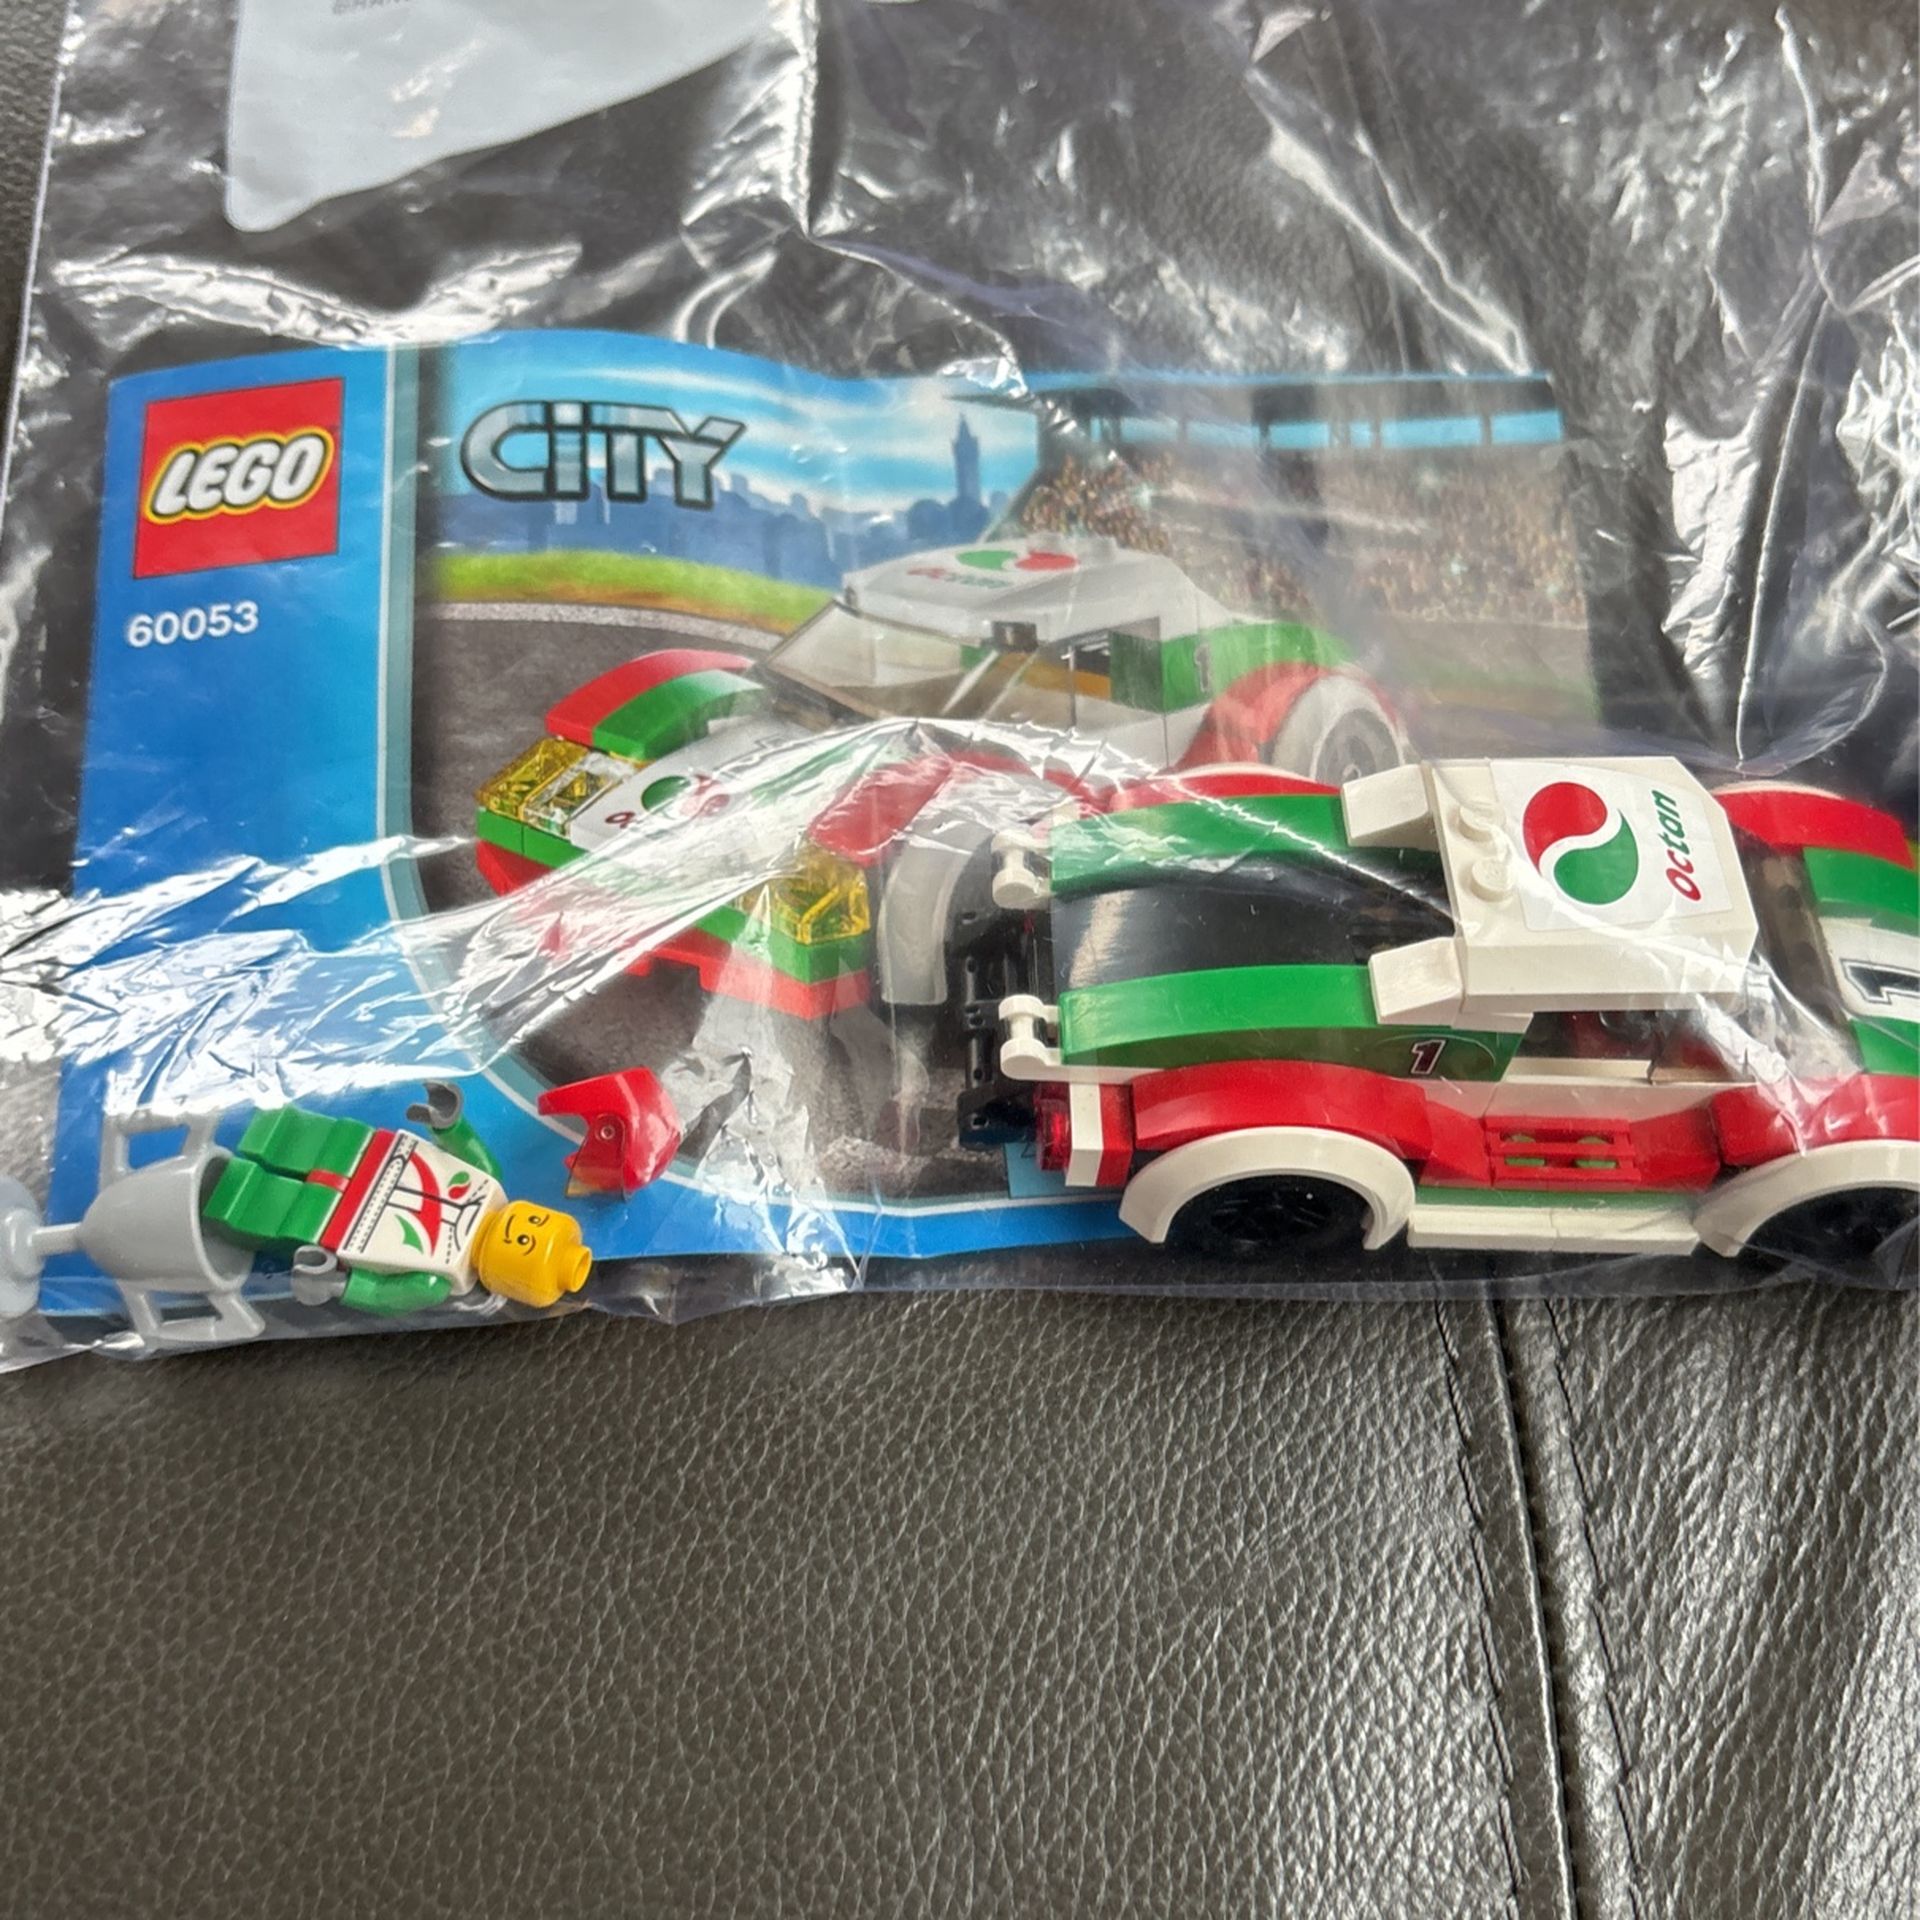 Lego Racecar W Figurine And Manual